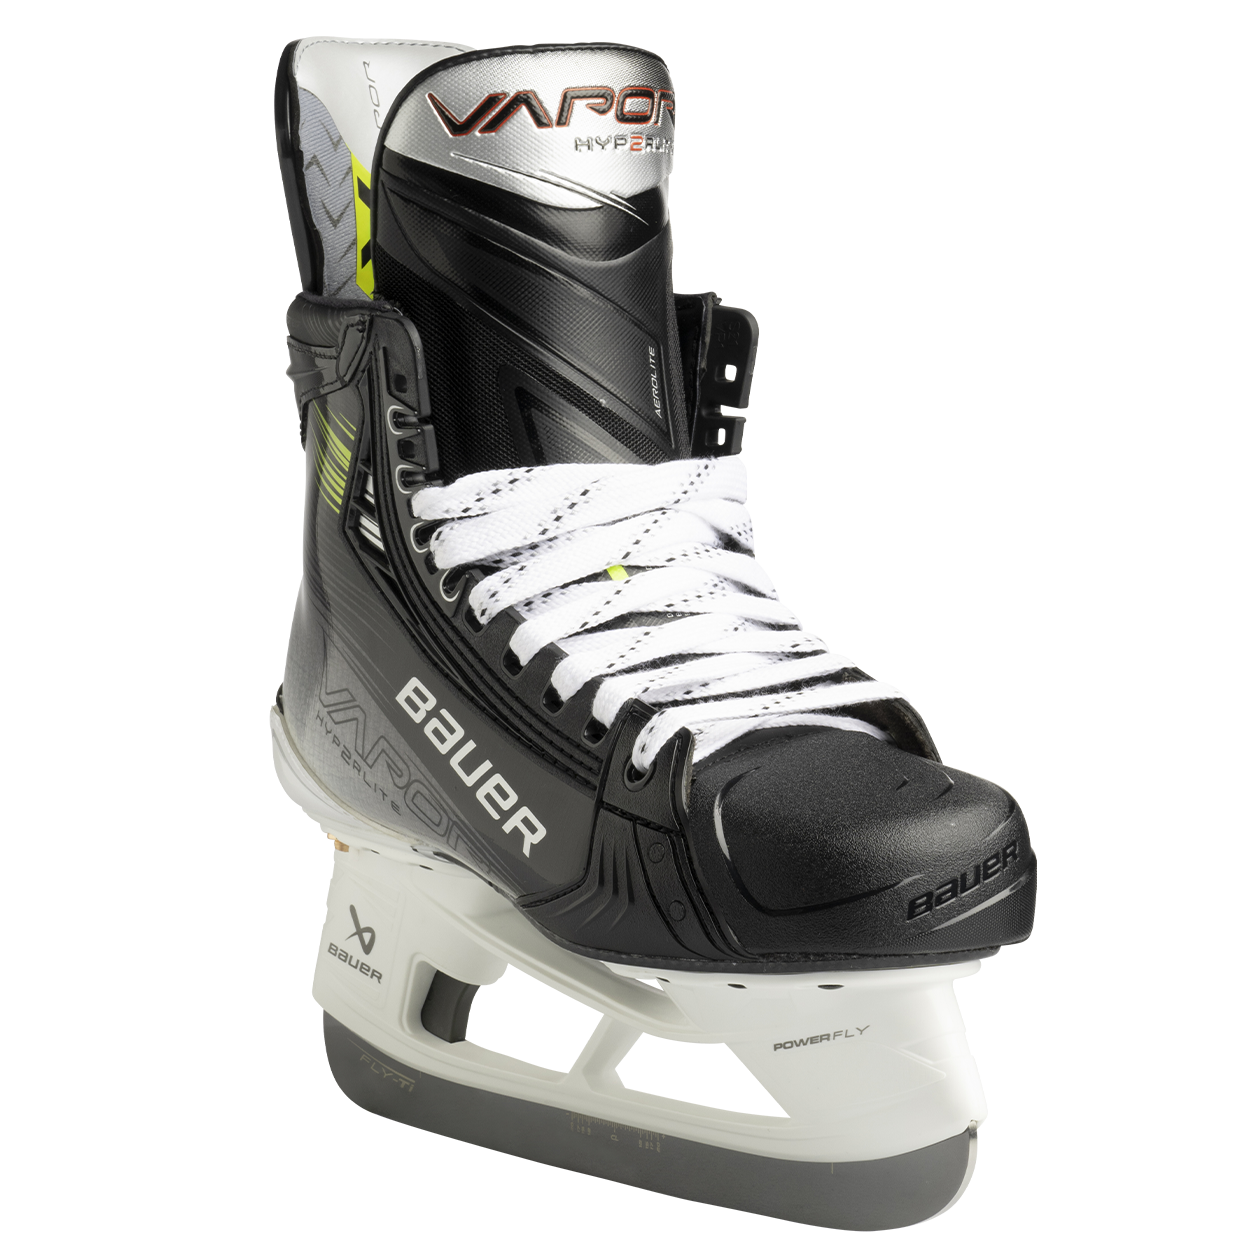 Bauer Vapor Hyperlite 2 Ice Hockey Skates - Senior - 8.5 - FIT1